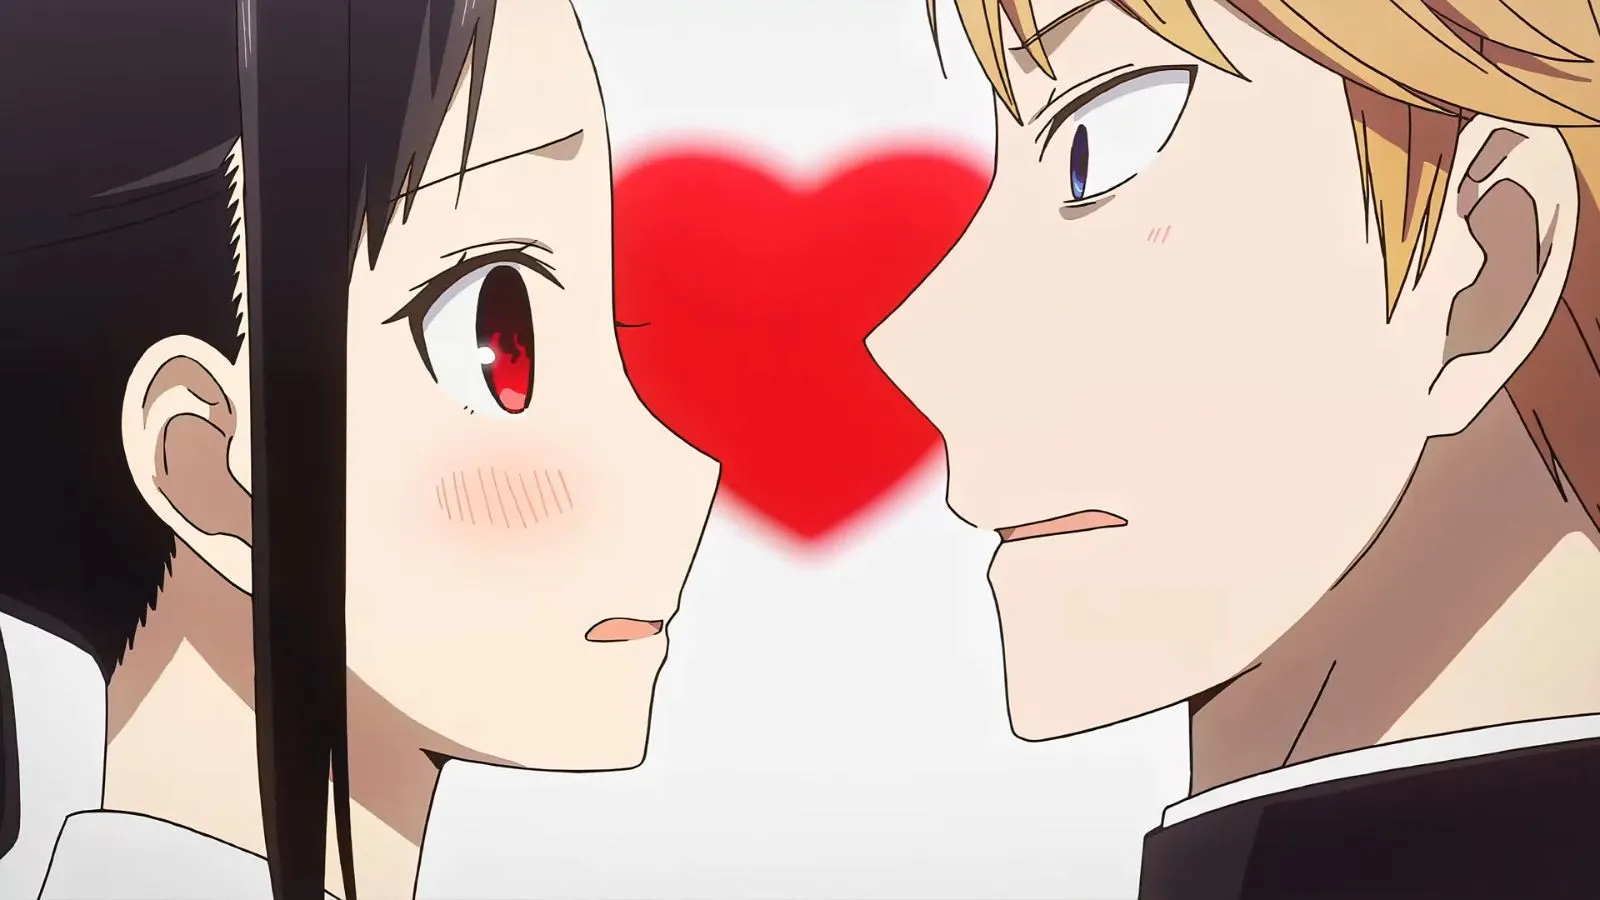 Kaguya-Sama Season 3 Anime 10-Minute Teaser Trailer Gets English